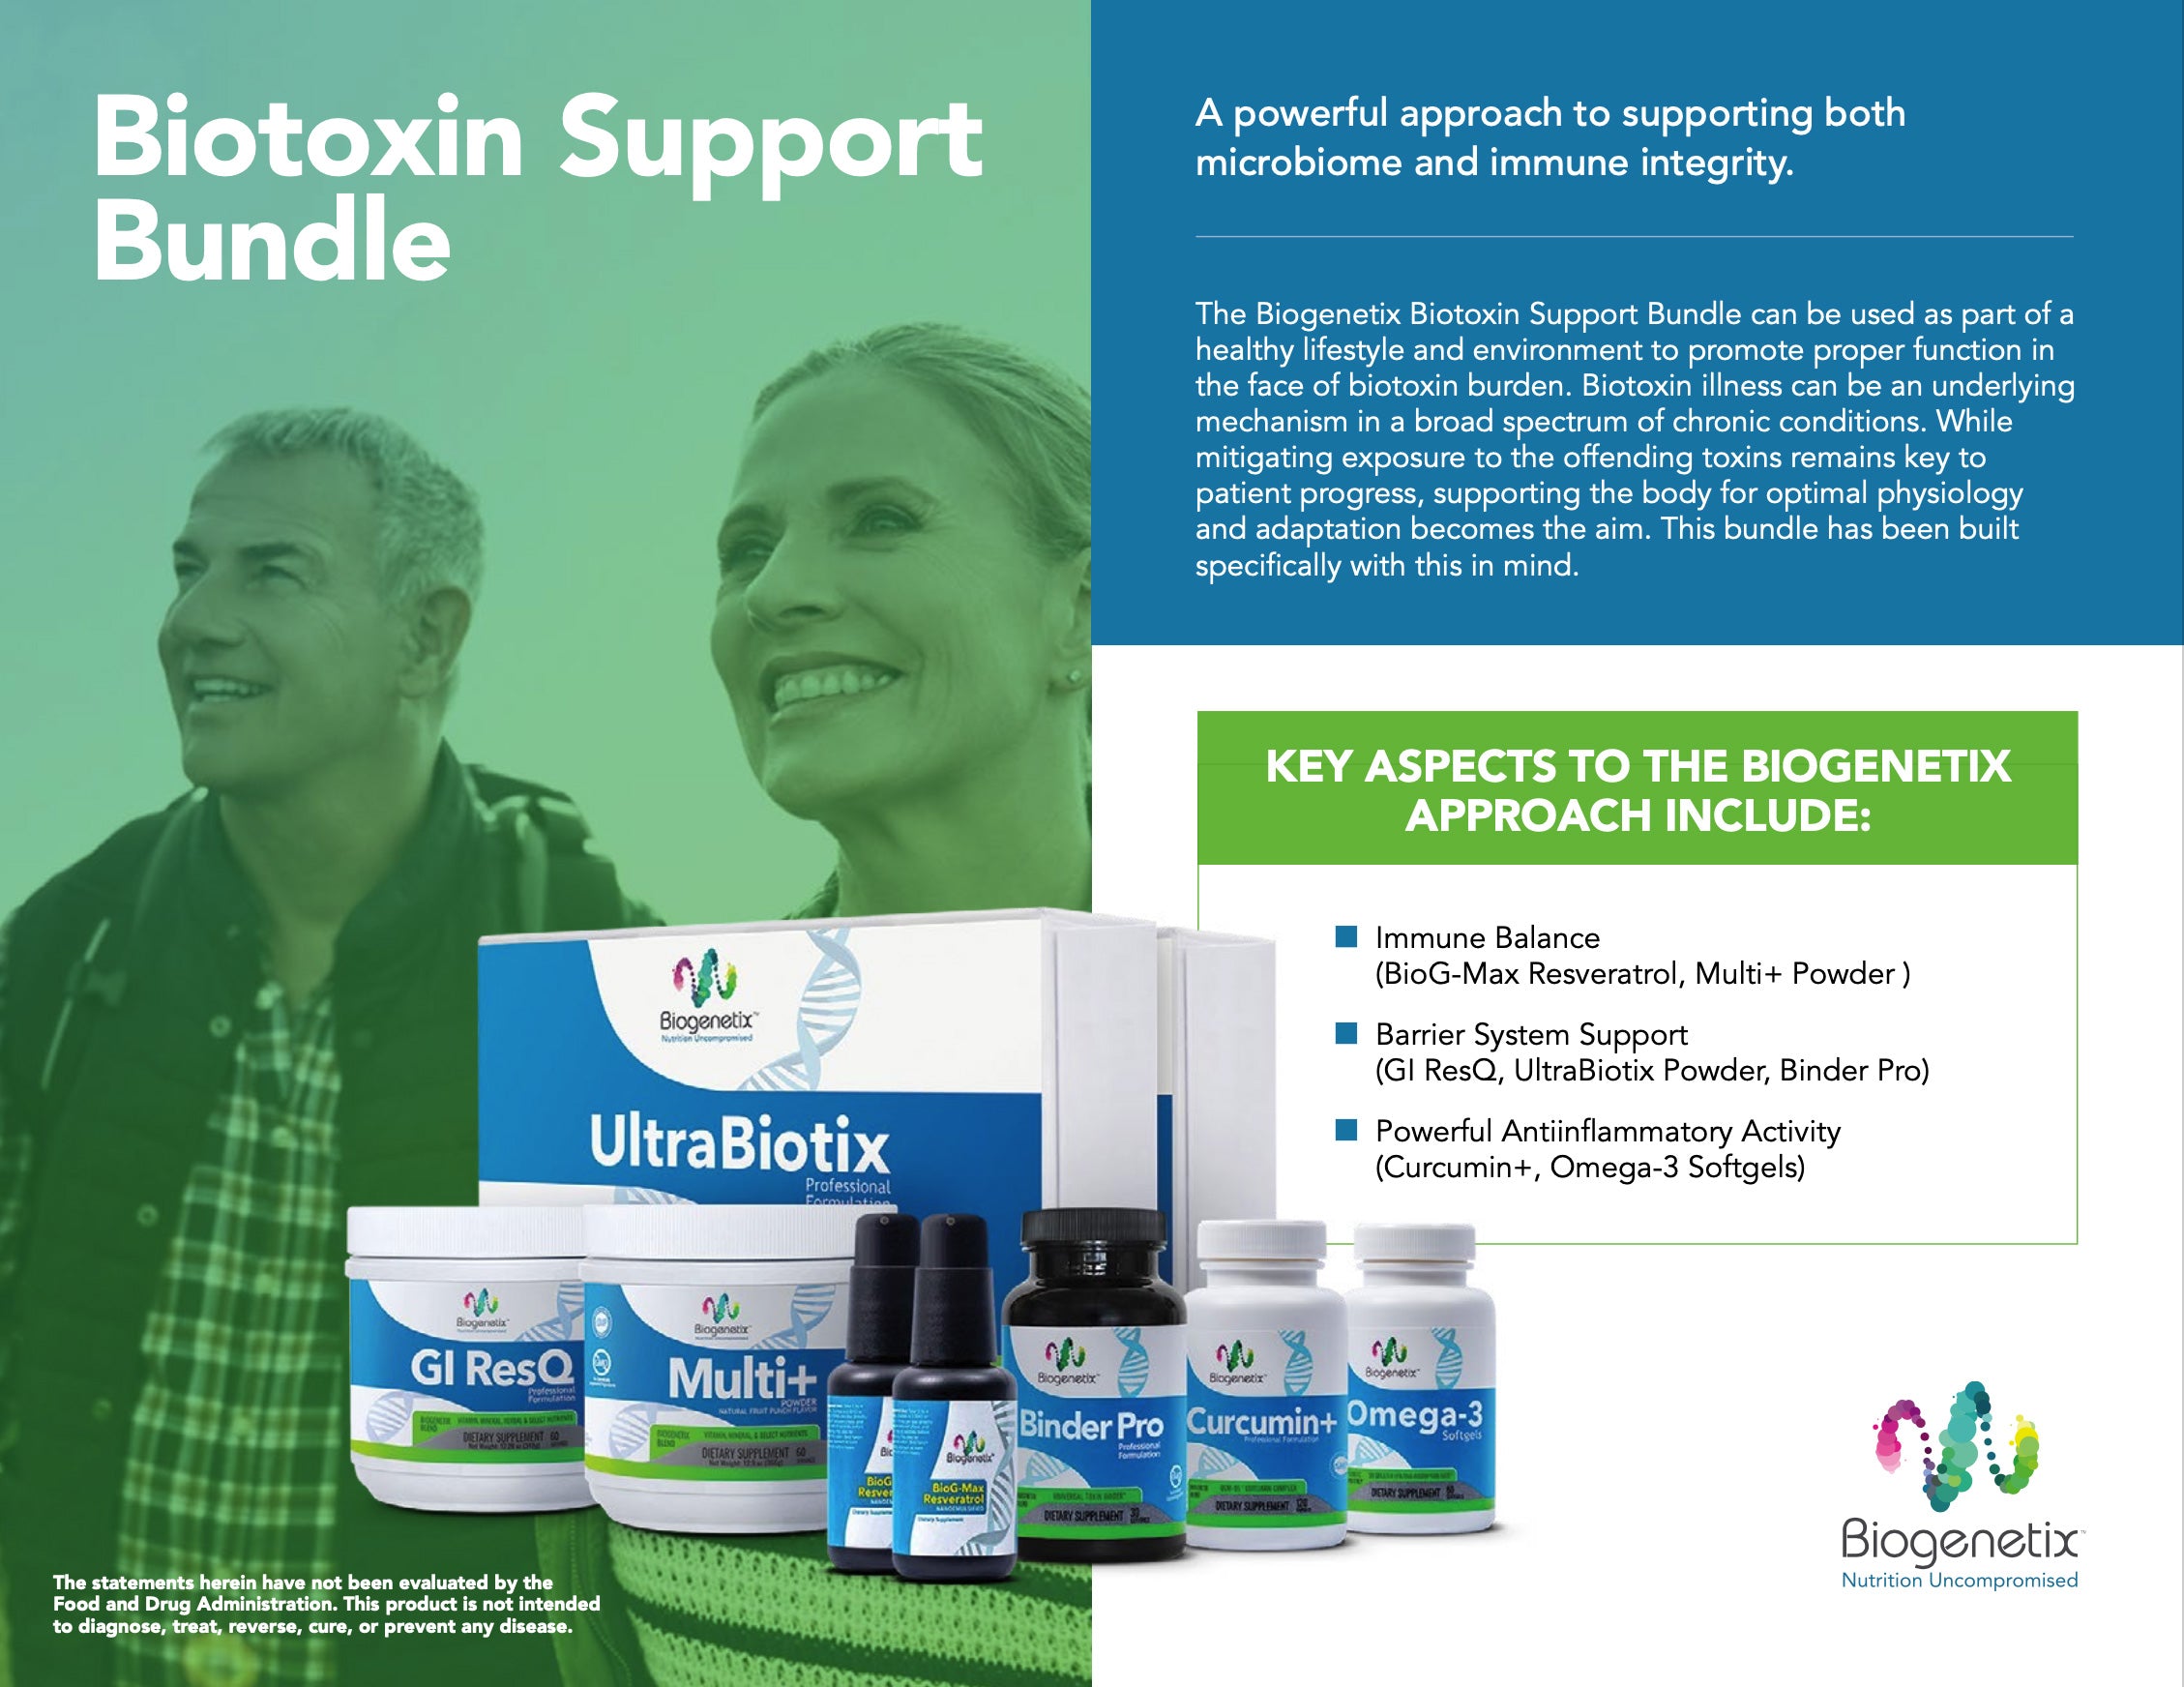 ViraX Plus - Biogenetix